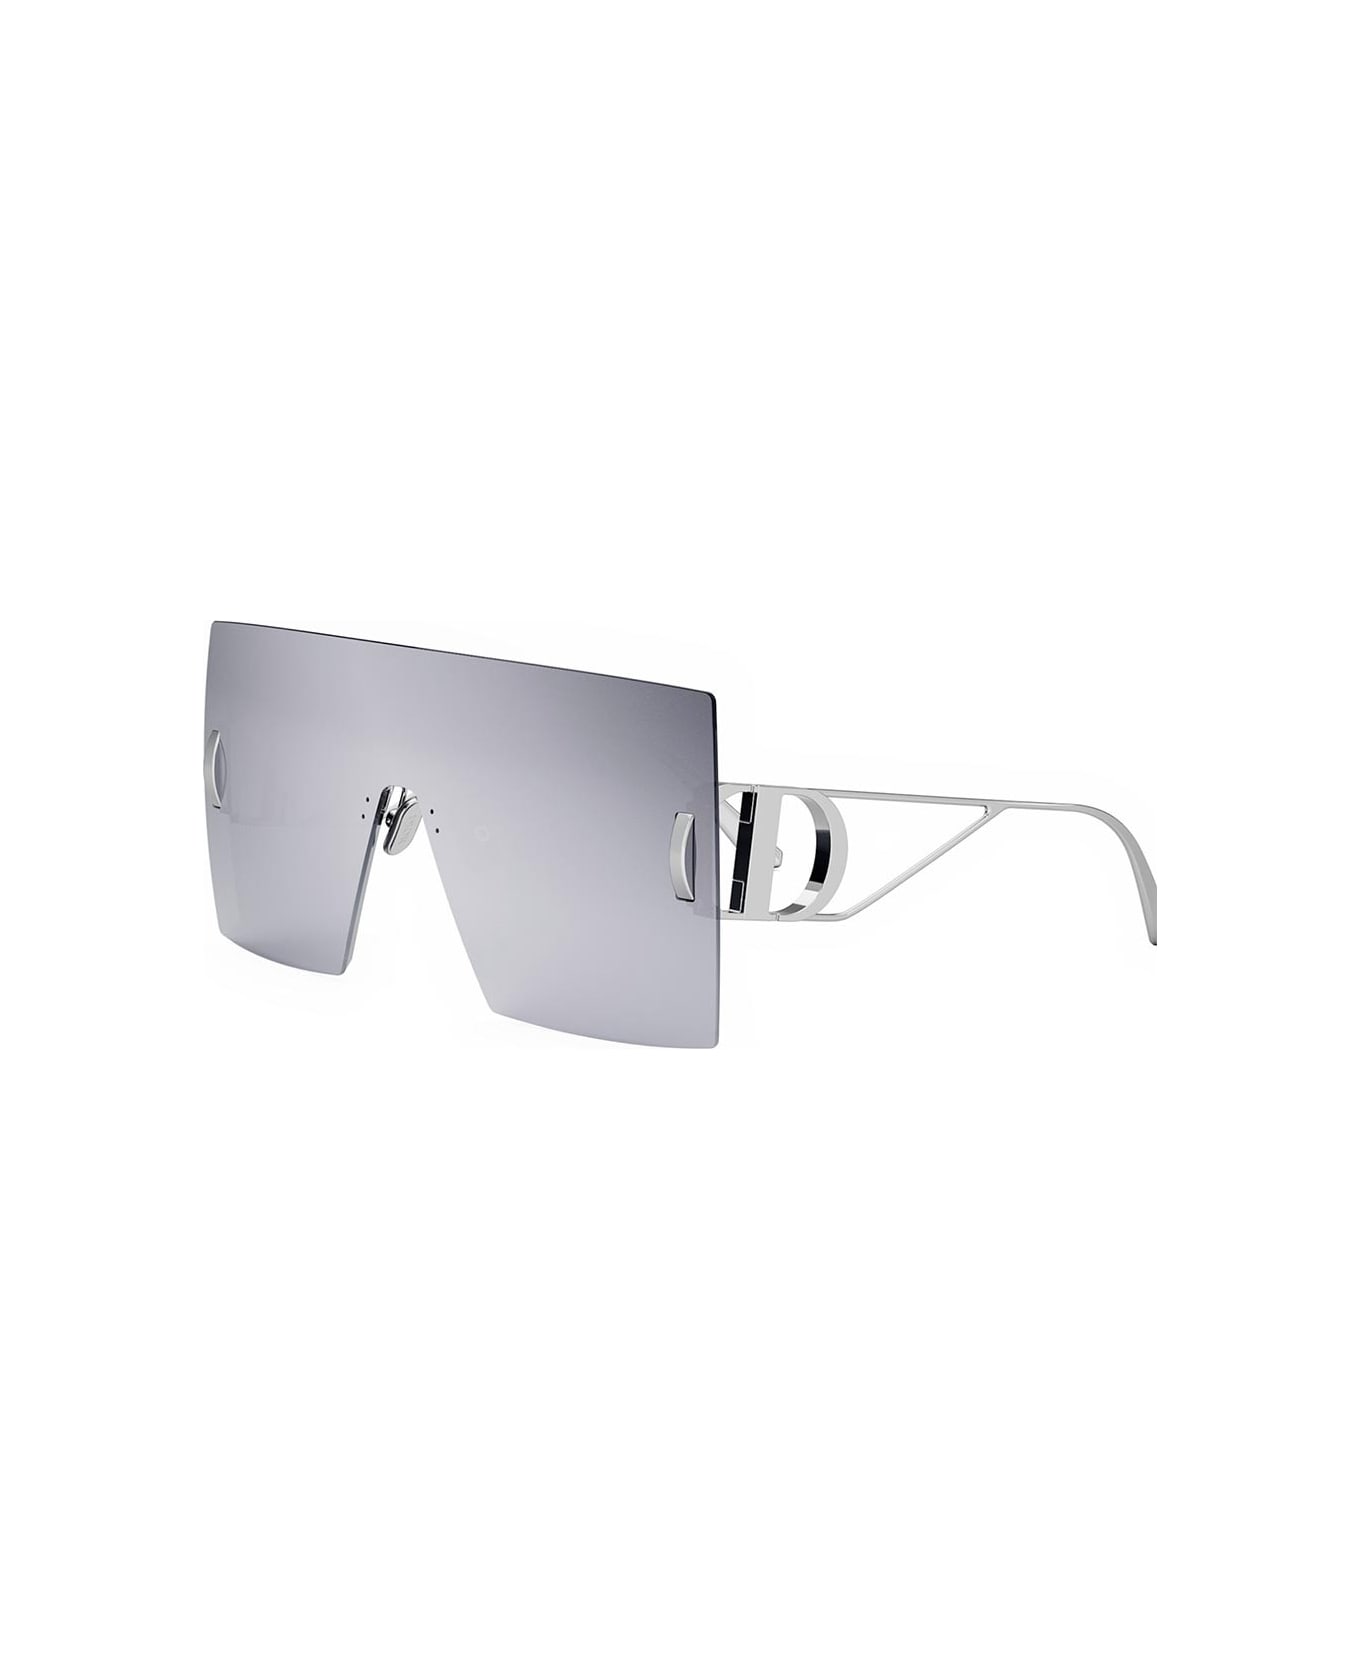 Dior Eyewear Sunglasses - Argento/Grigio specchiato